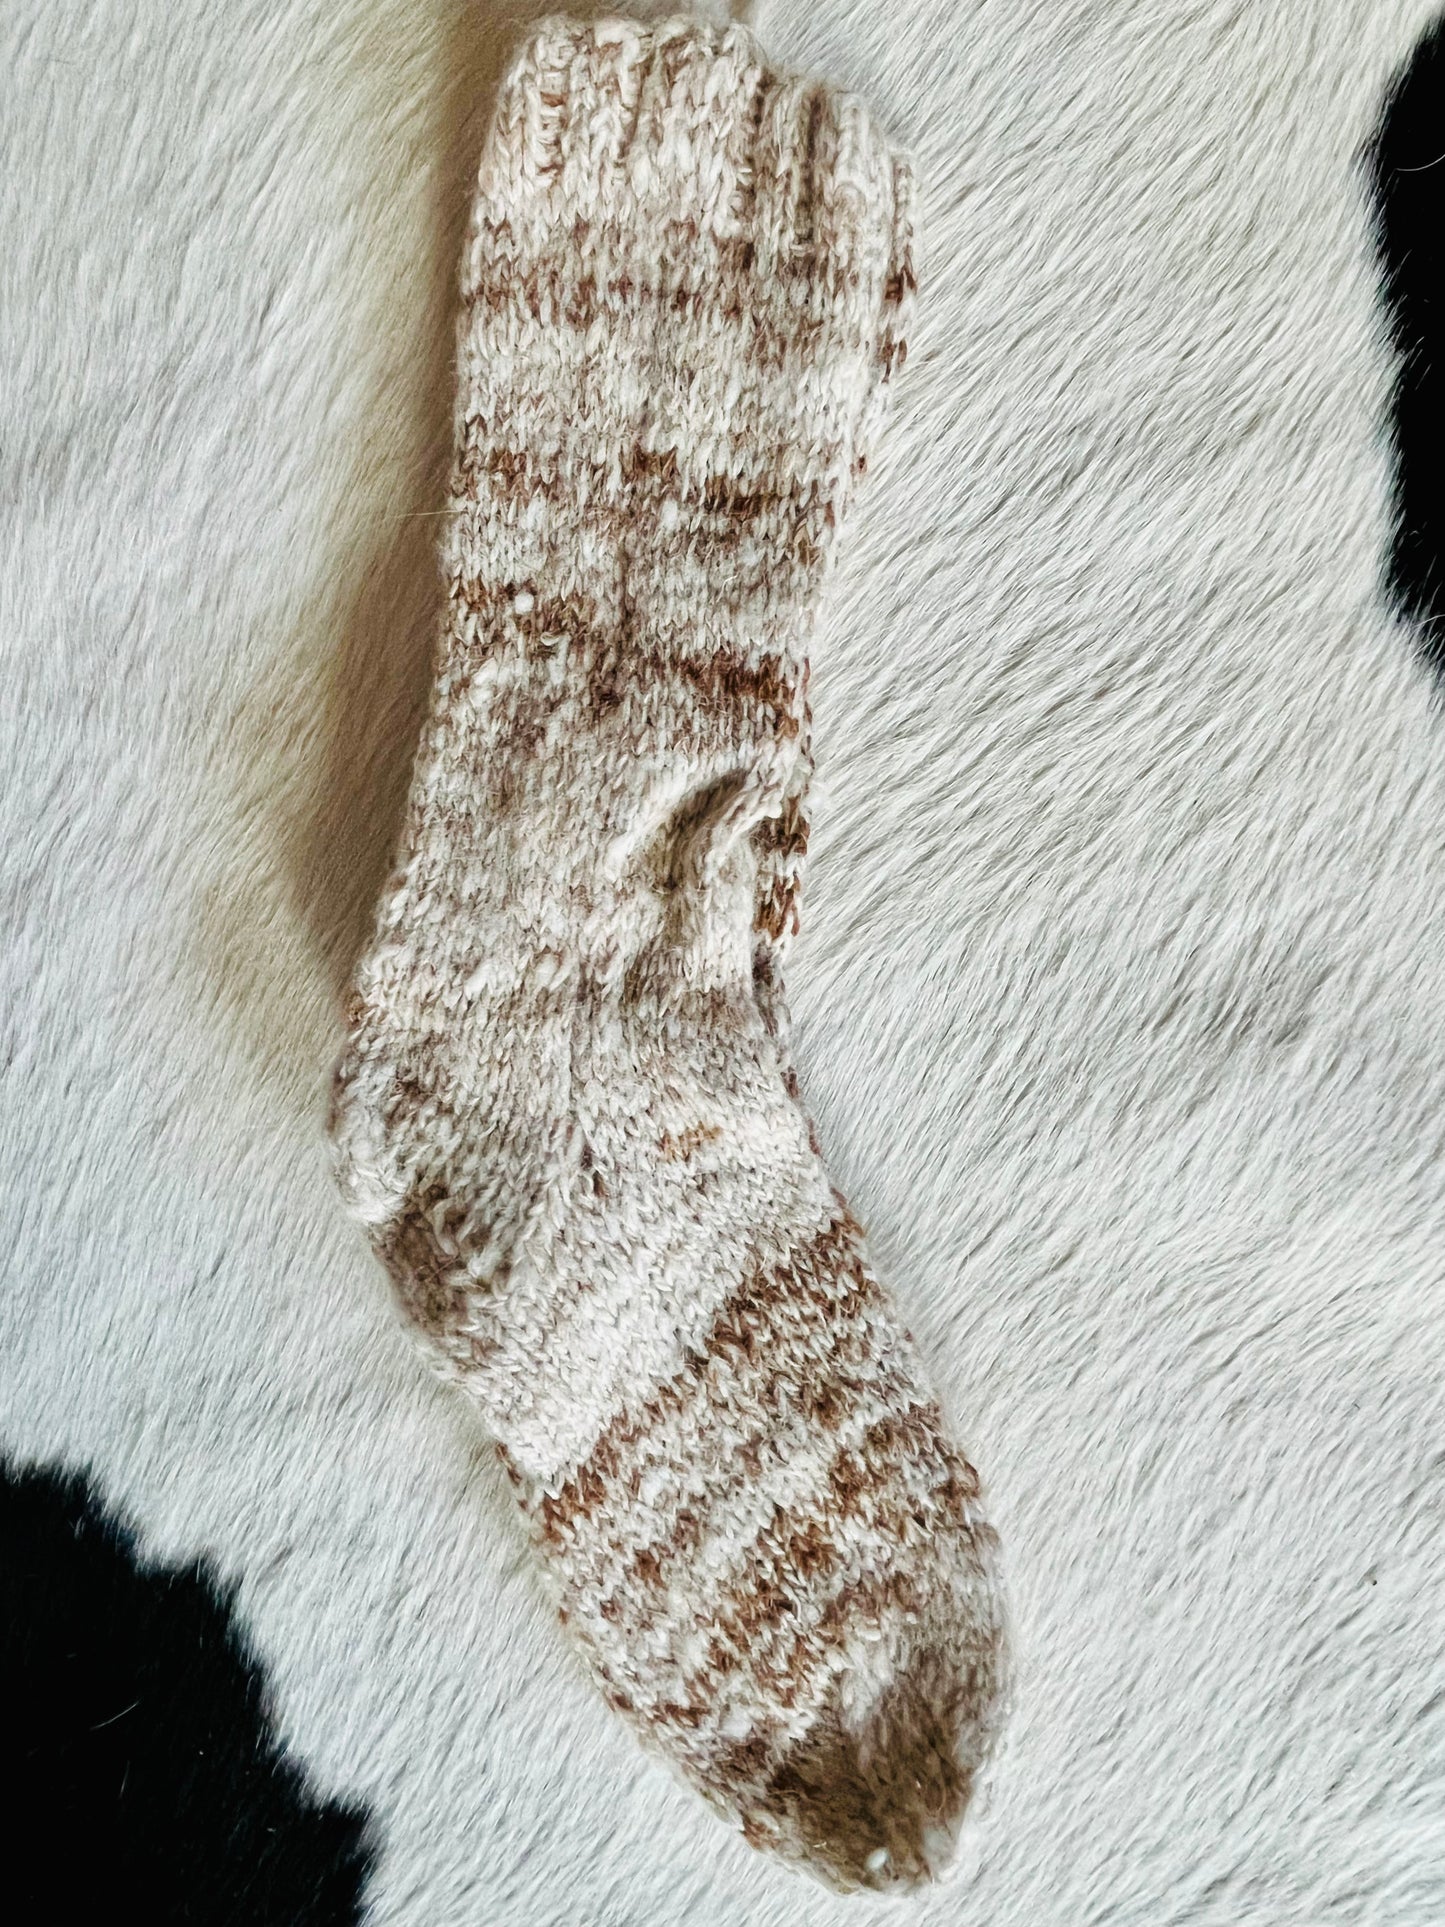 COLIBRI socks